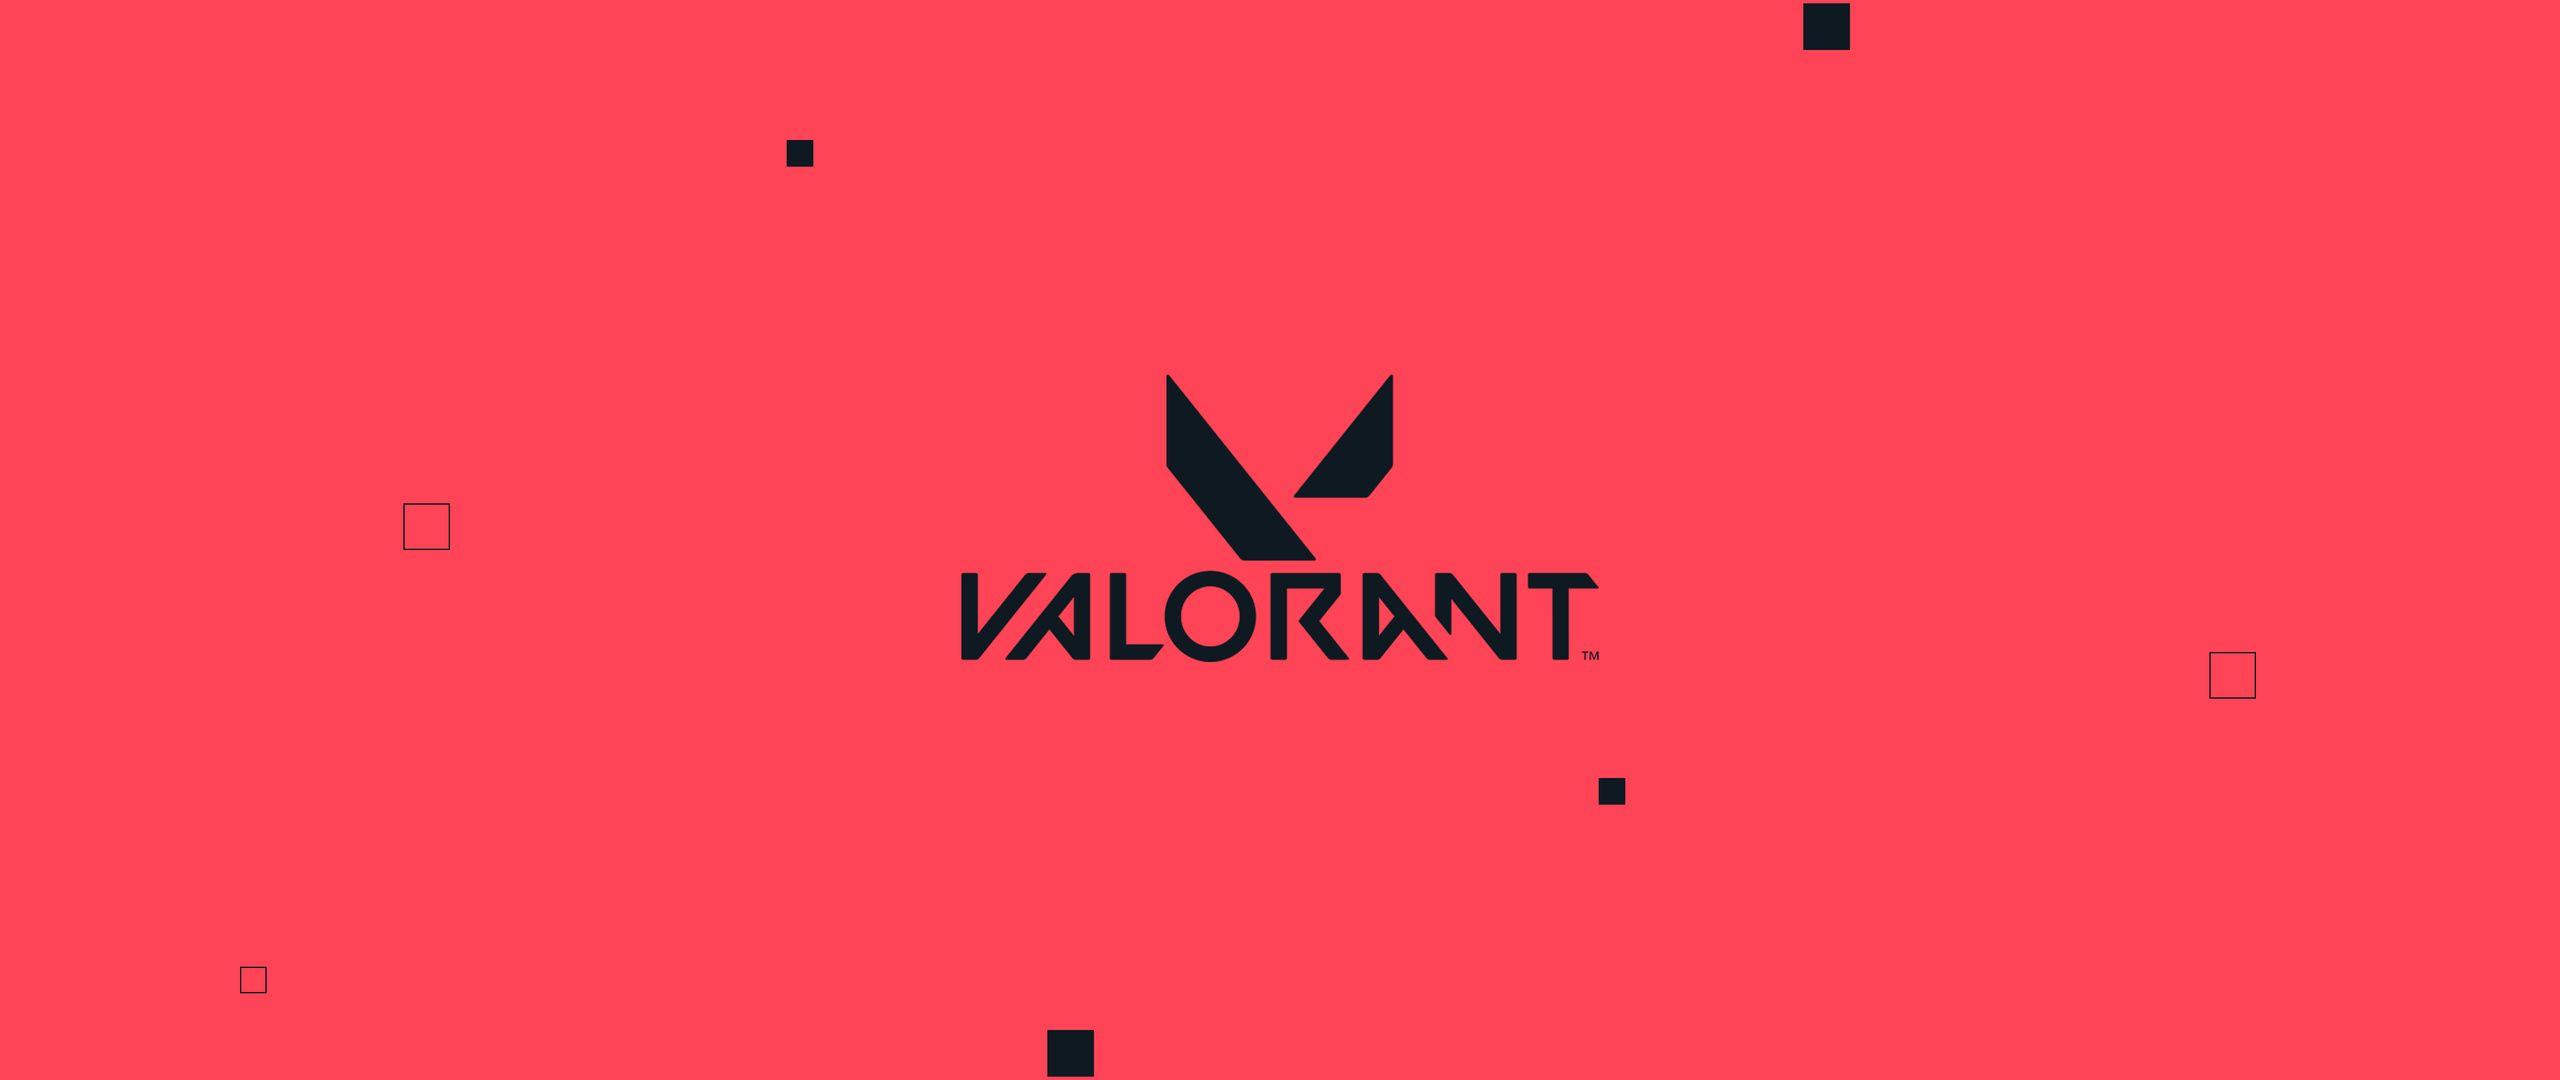 Valorant Dual Monitor Wallpapers - Top Free Valorant Dual Monitor ...